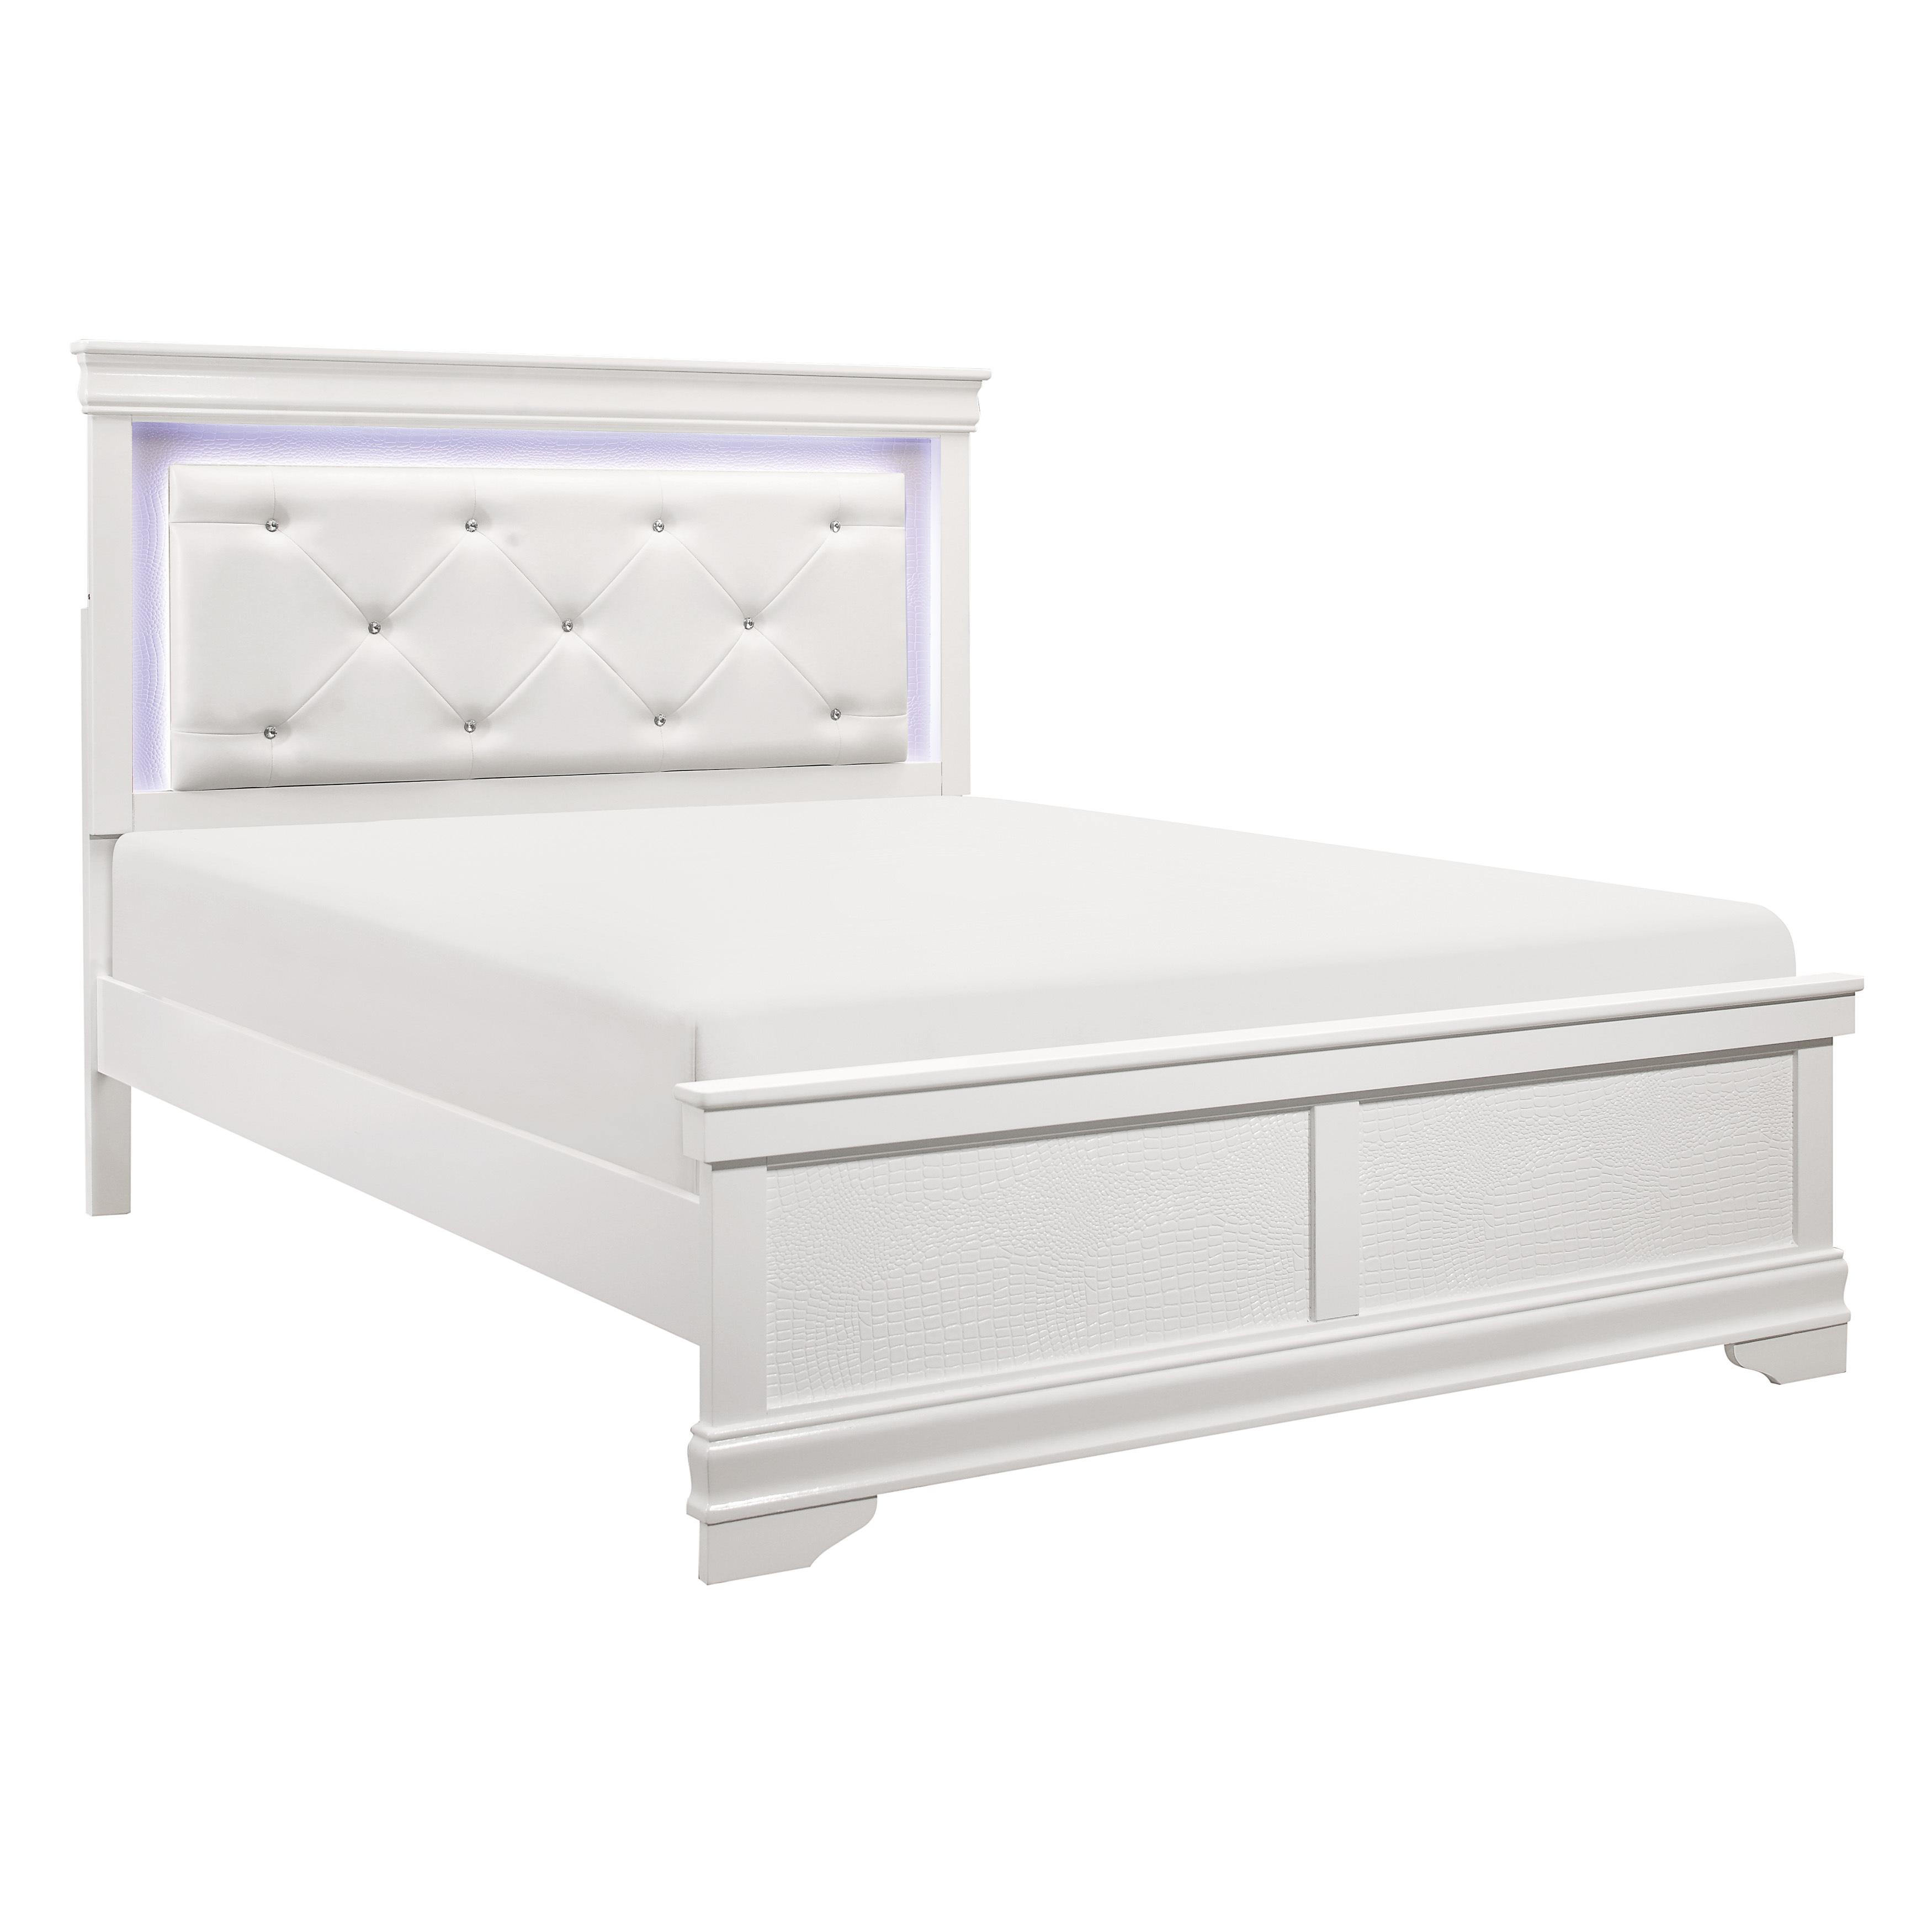 

    
Traditional White Wood CAL Bedroom Set 3pcs Homelegance 1556WK-1CK* Lana
